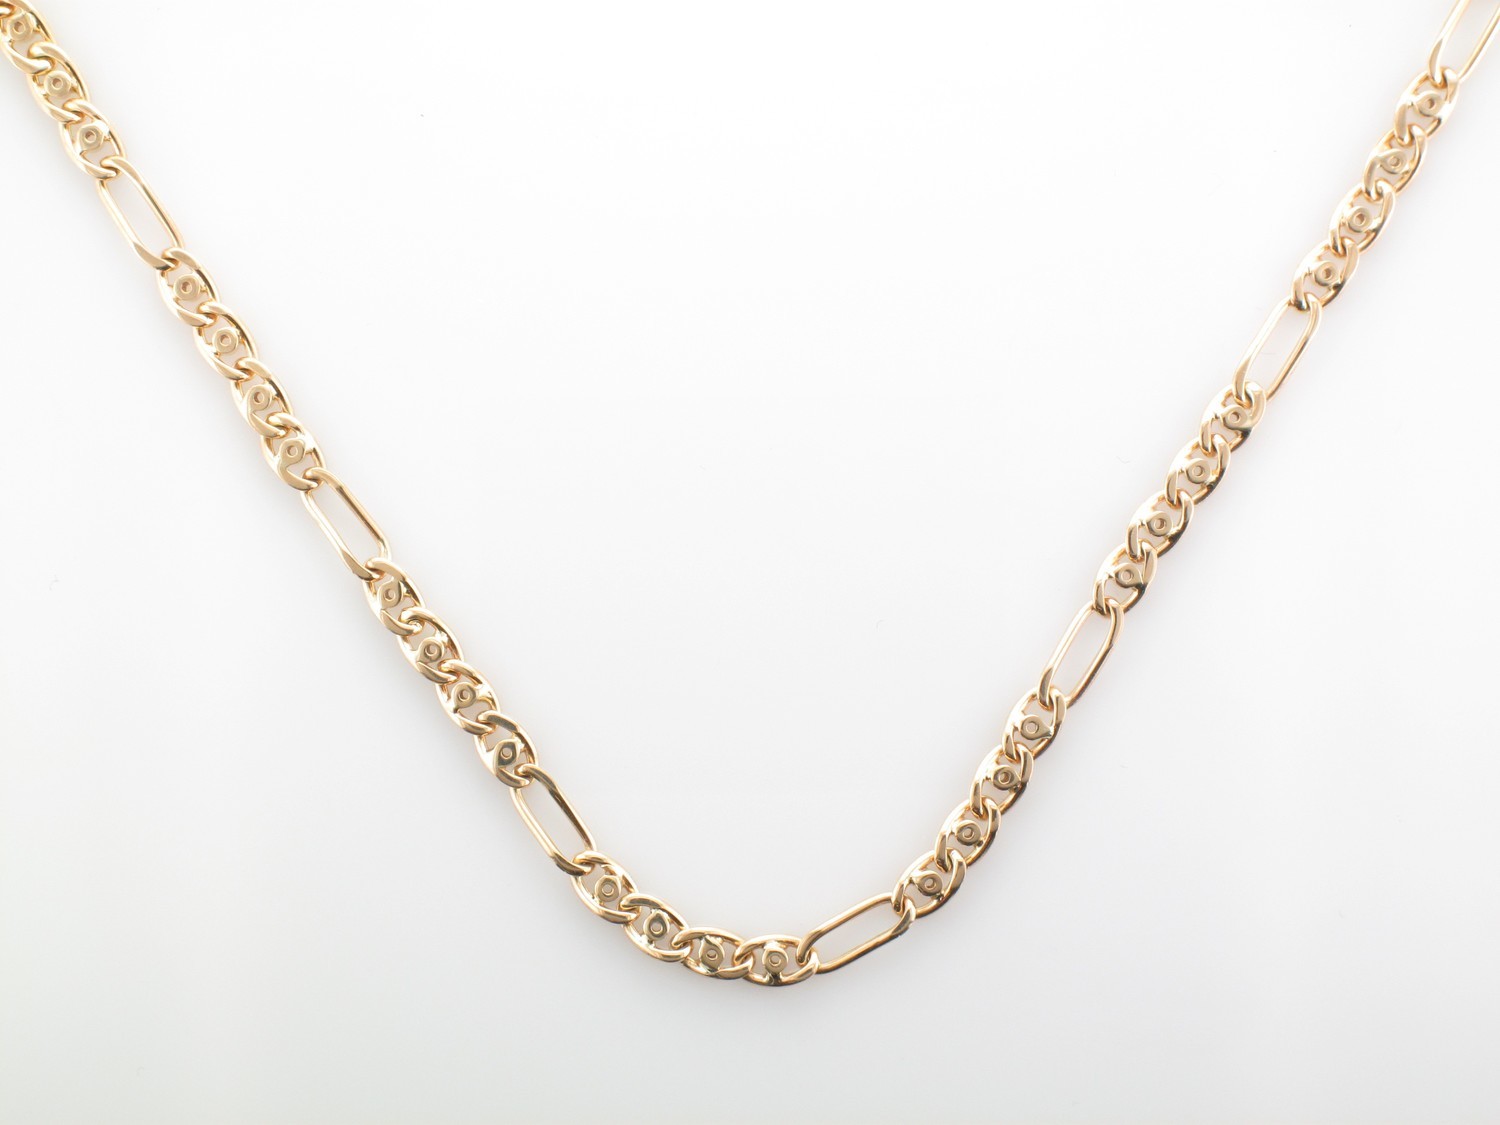 Ladies 9 carat yellow gold fancy link chain